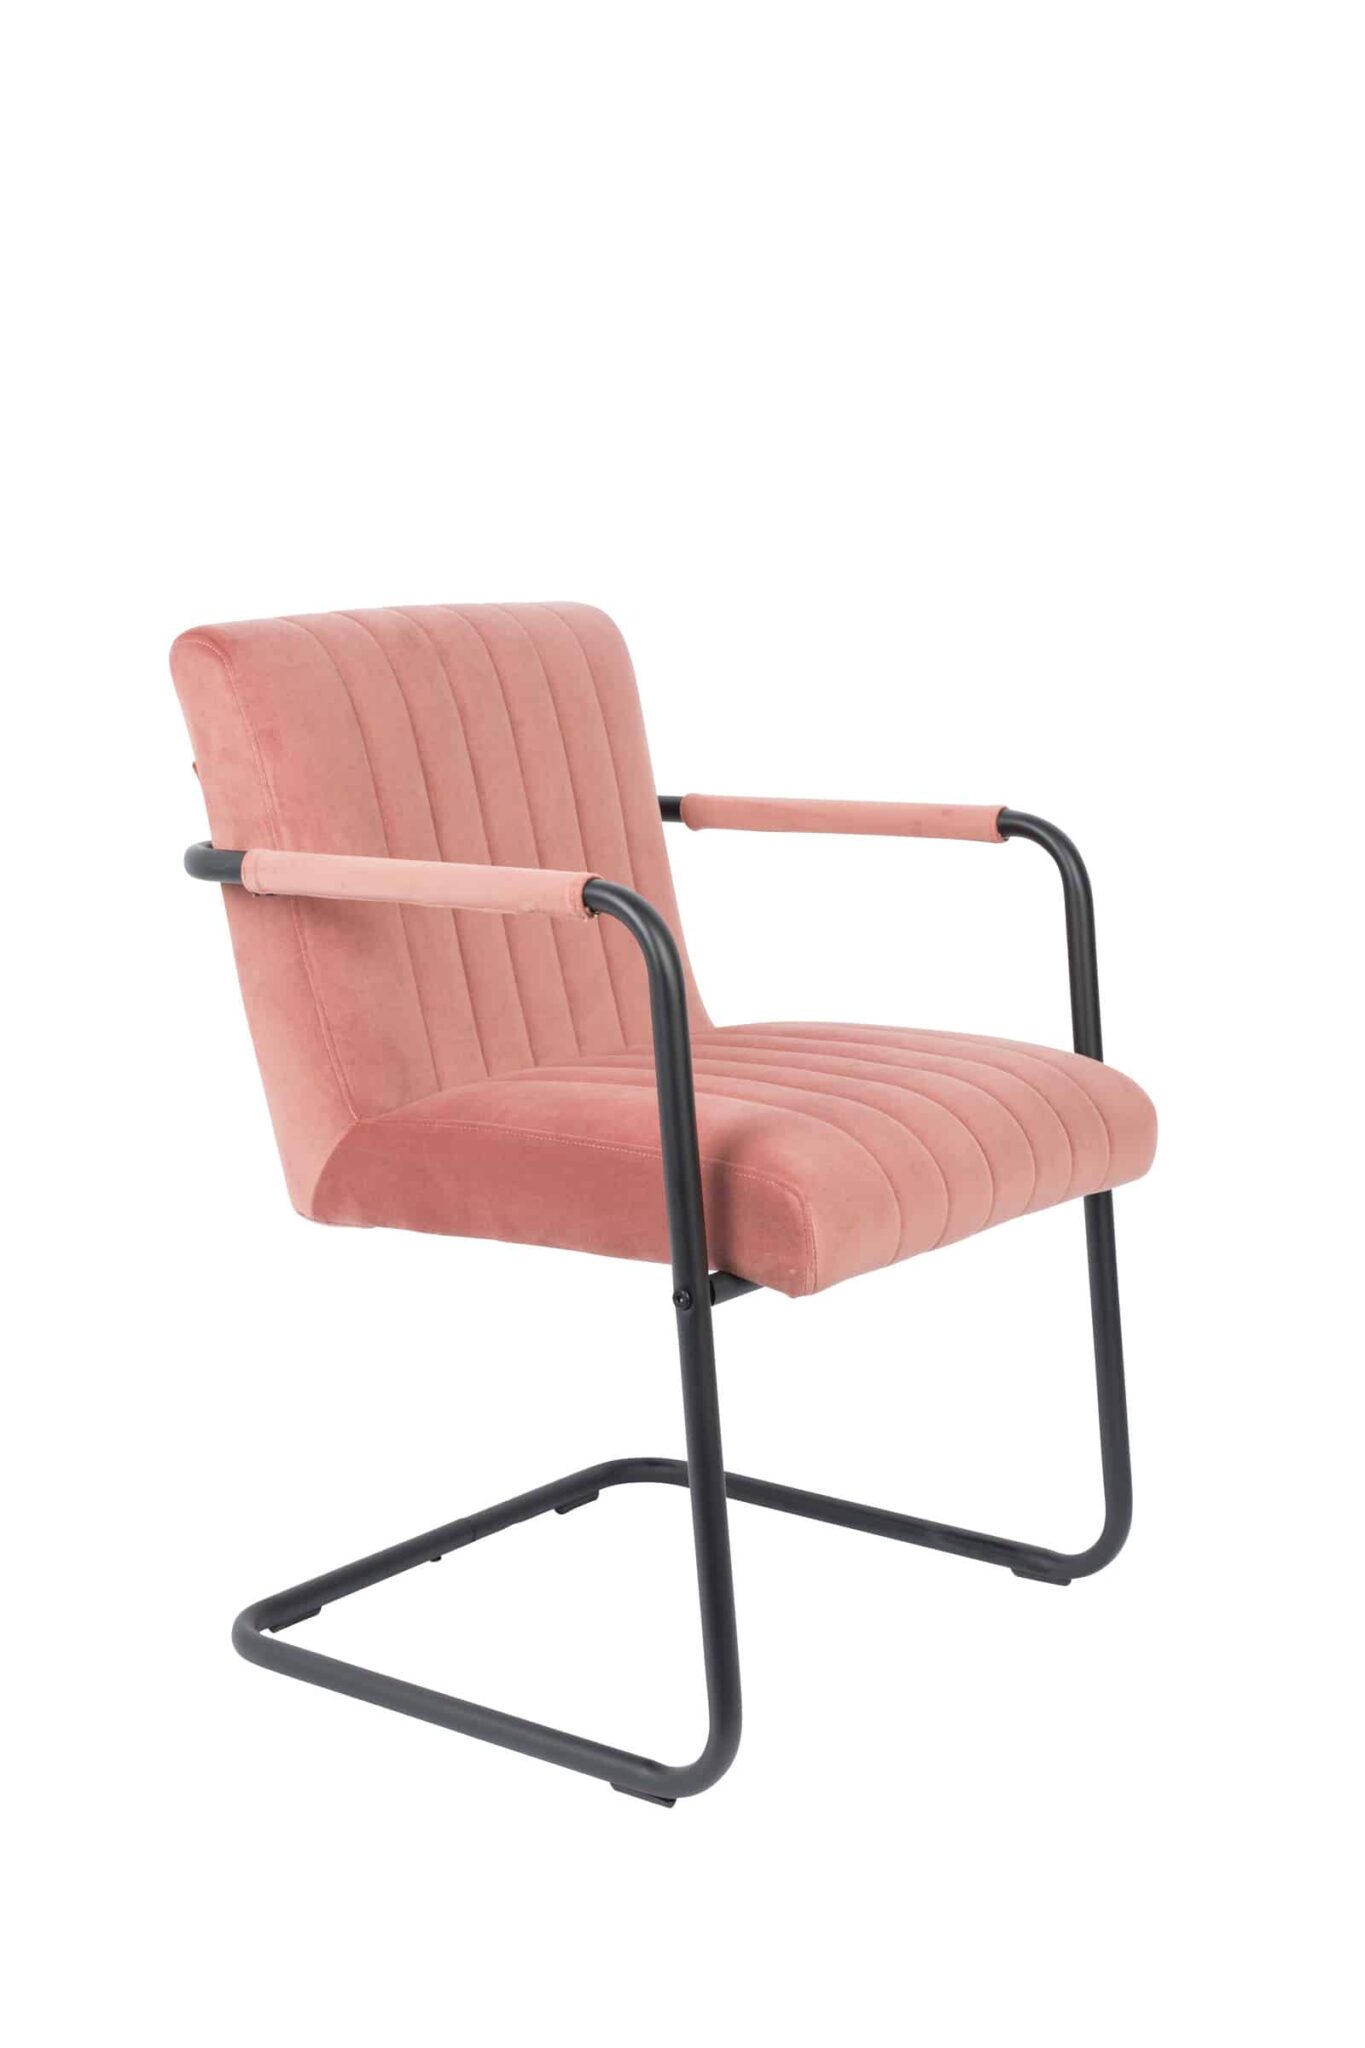 stapel Draaien Oneindigheid 2 x Stitched stoel velvet Dutchbone - Designshopp